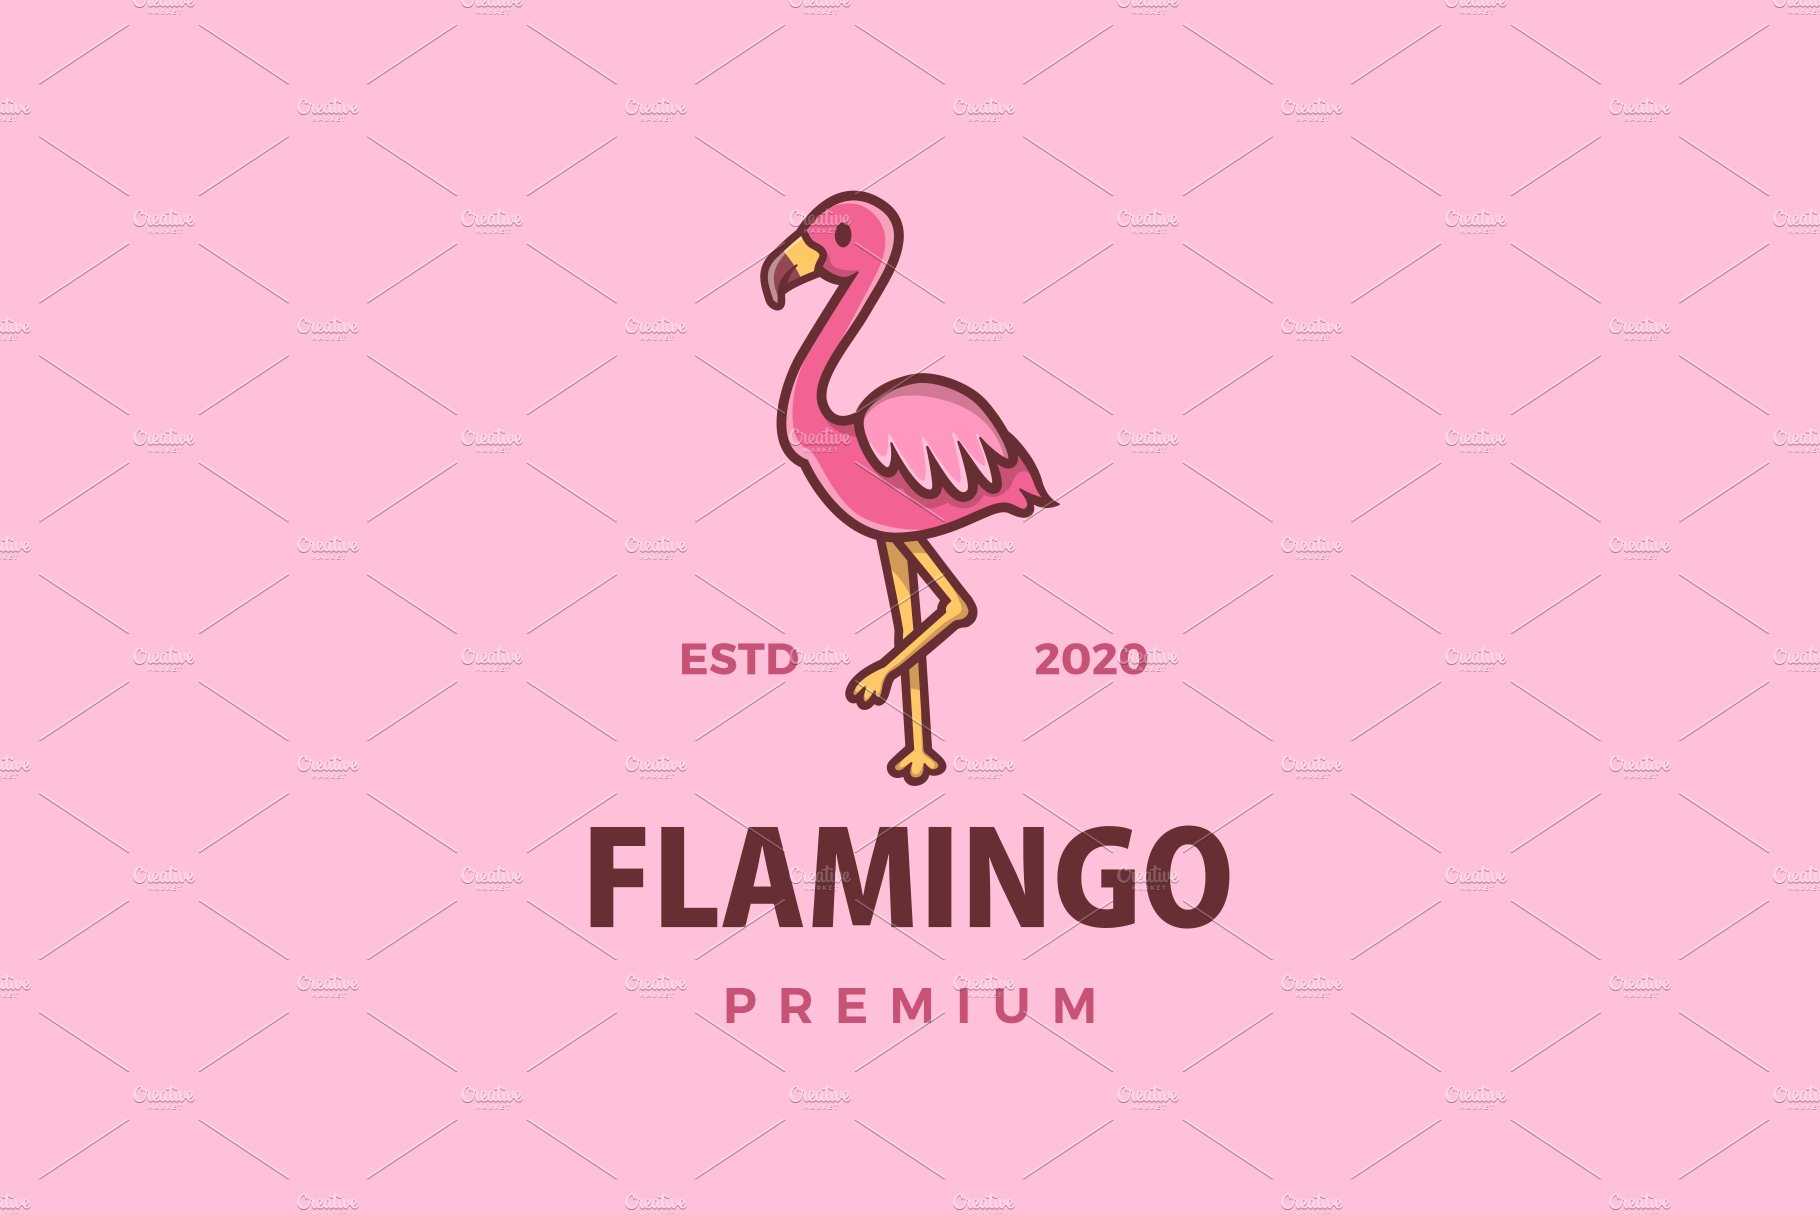 cute flamingo cartoon logo vector cover image.